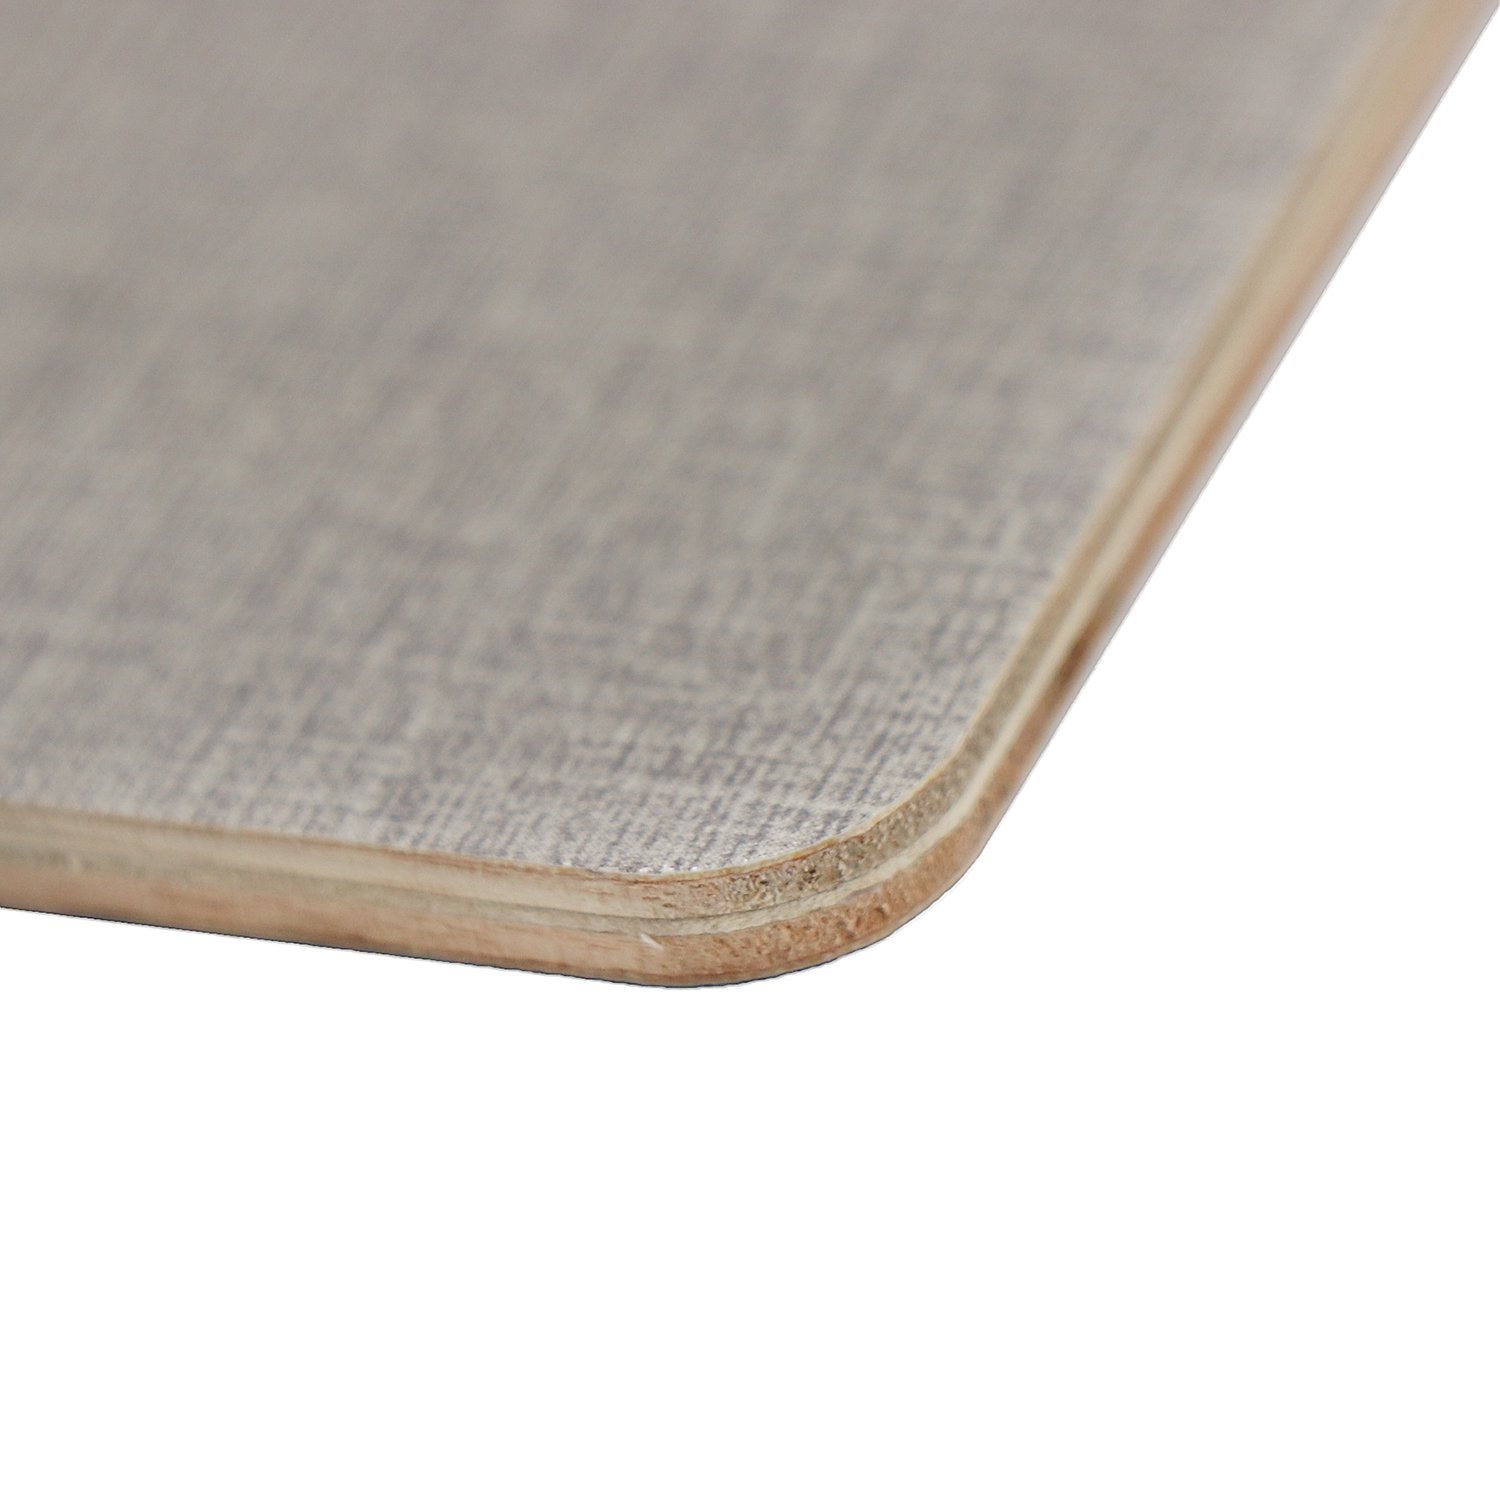 China Factory Supply Melamine Coated Plywood E0 E1 Grade Plywood Board for Furniture